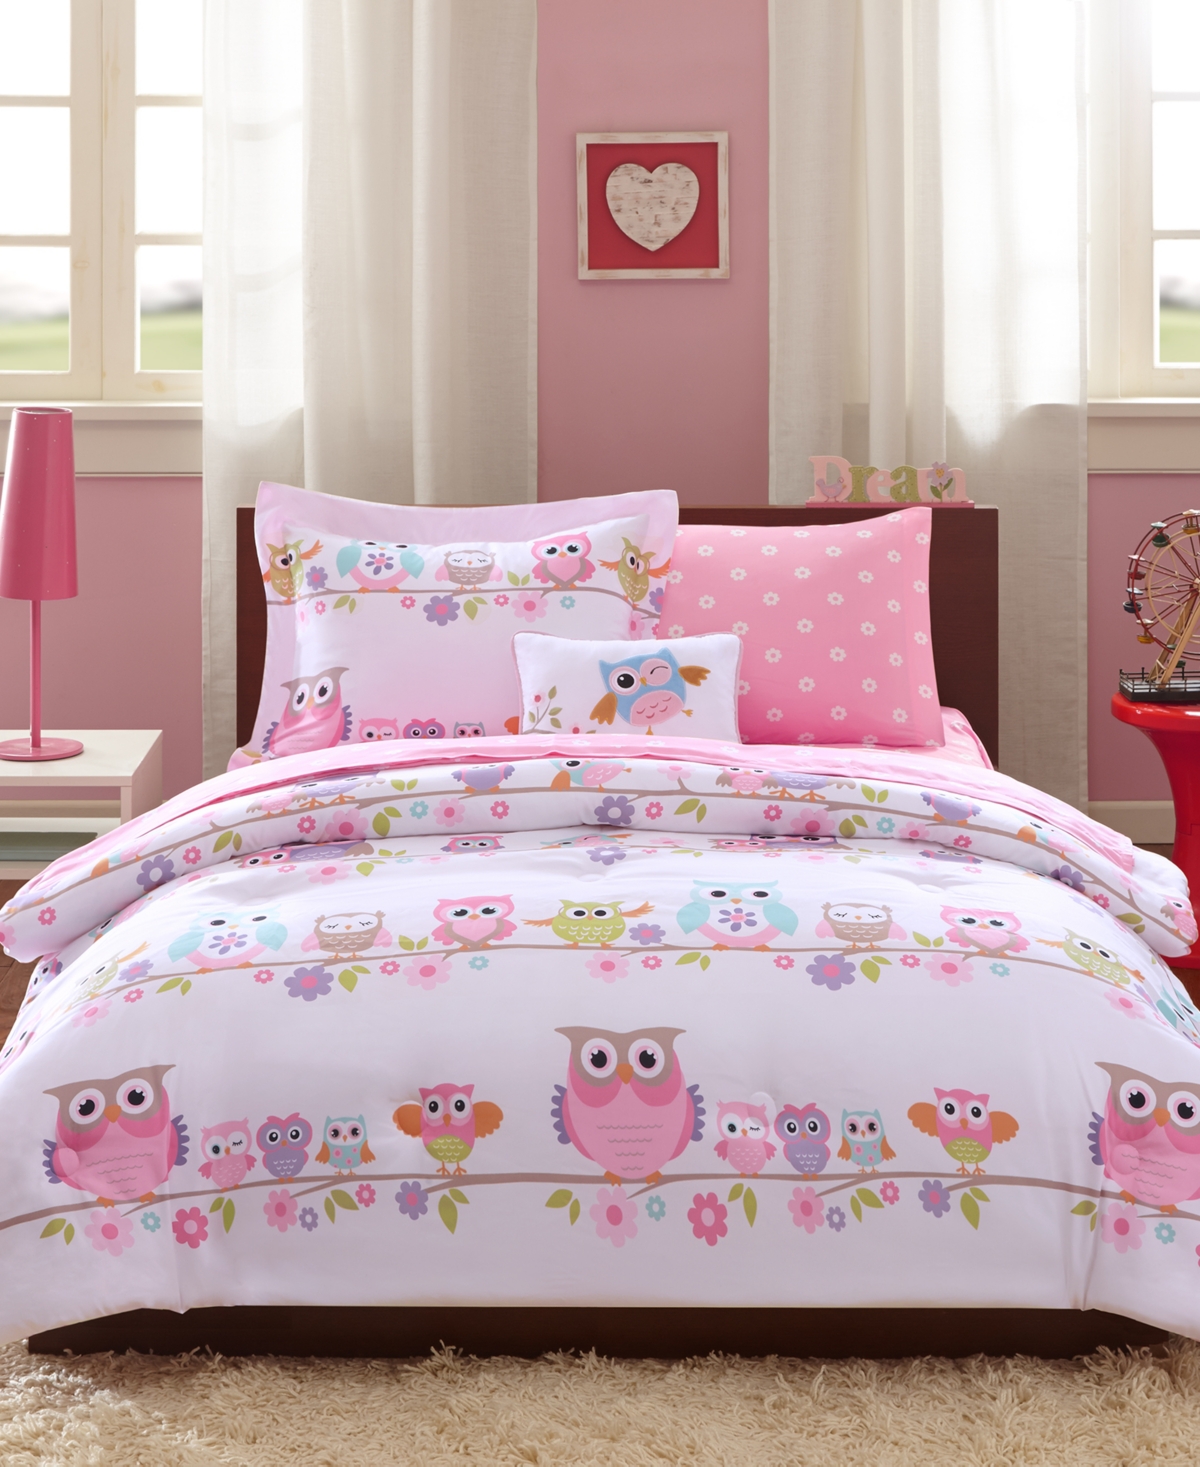 Mi Zone Kids Wise Wendy, White, 6-piece Reversible Twin Comforter Set Bedding In Pink